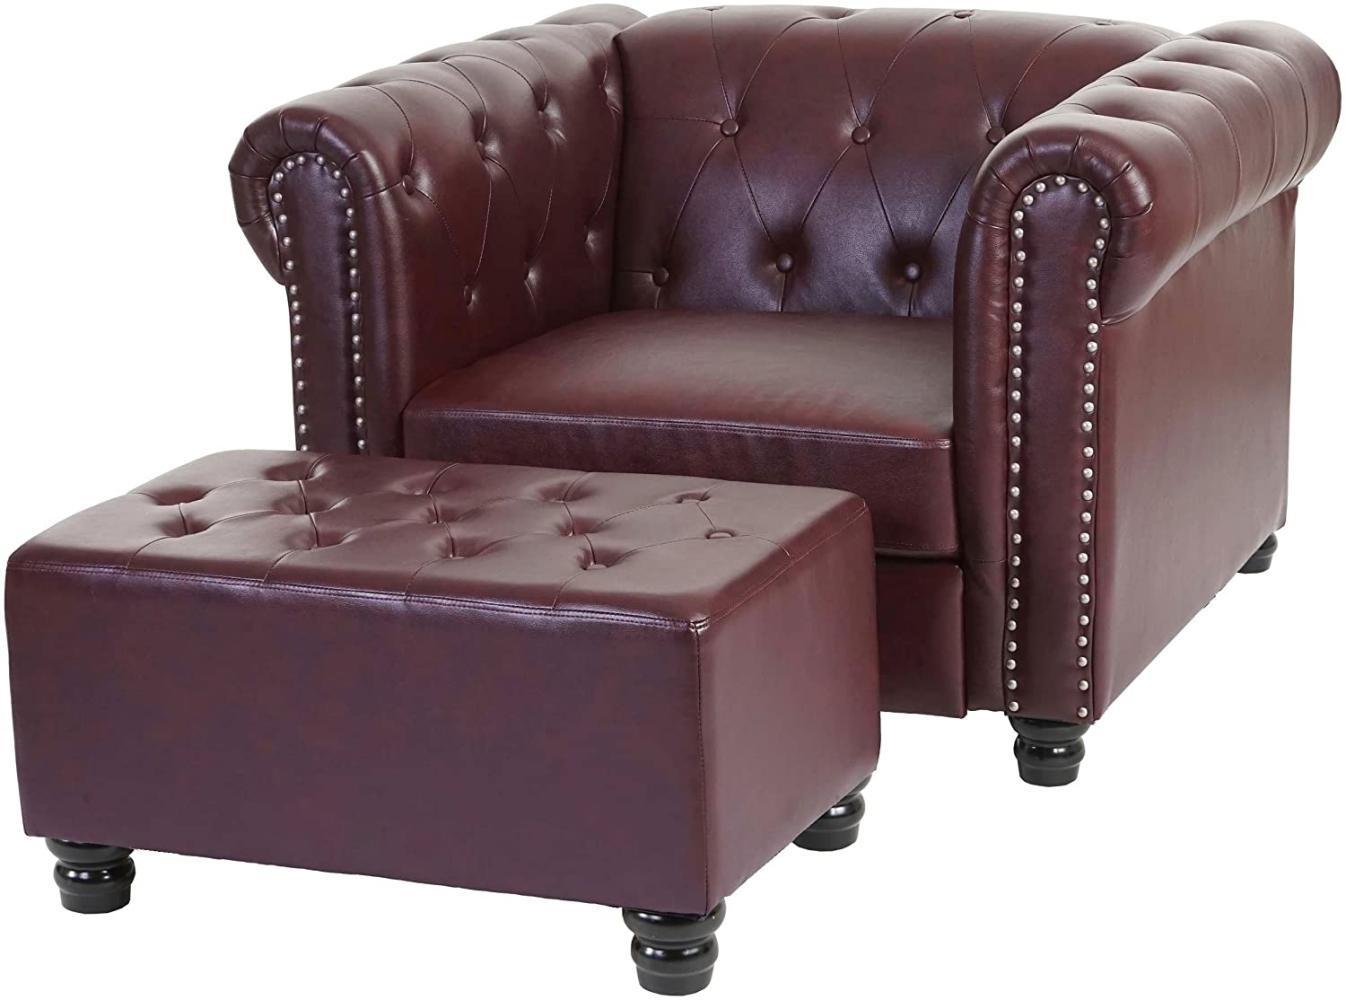 Luxus Sessel Loungesessel Relaxsessel Chesterfield Kunstleder ~ runde Füße, rot-braun mit Ottomane Bild 1